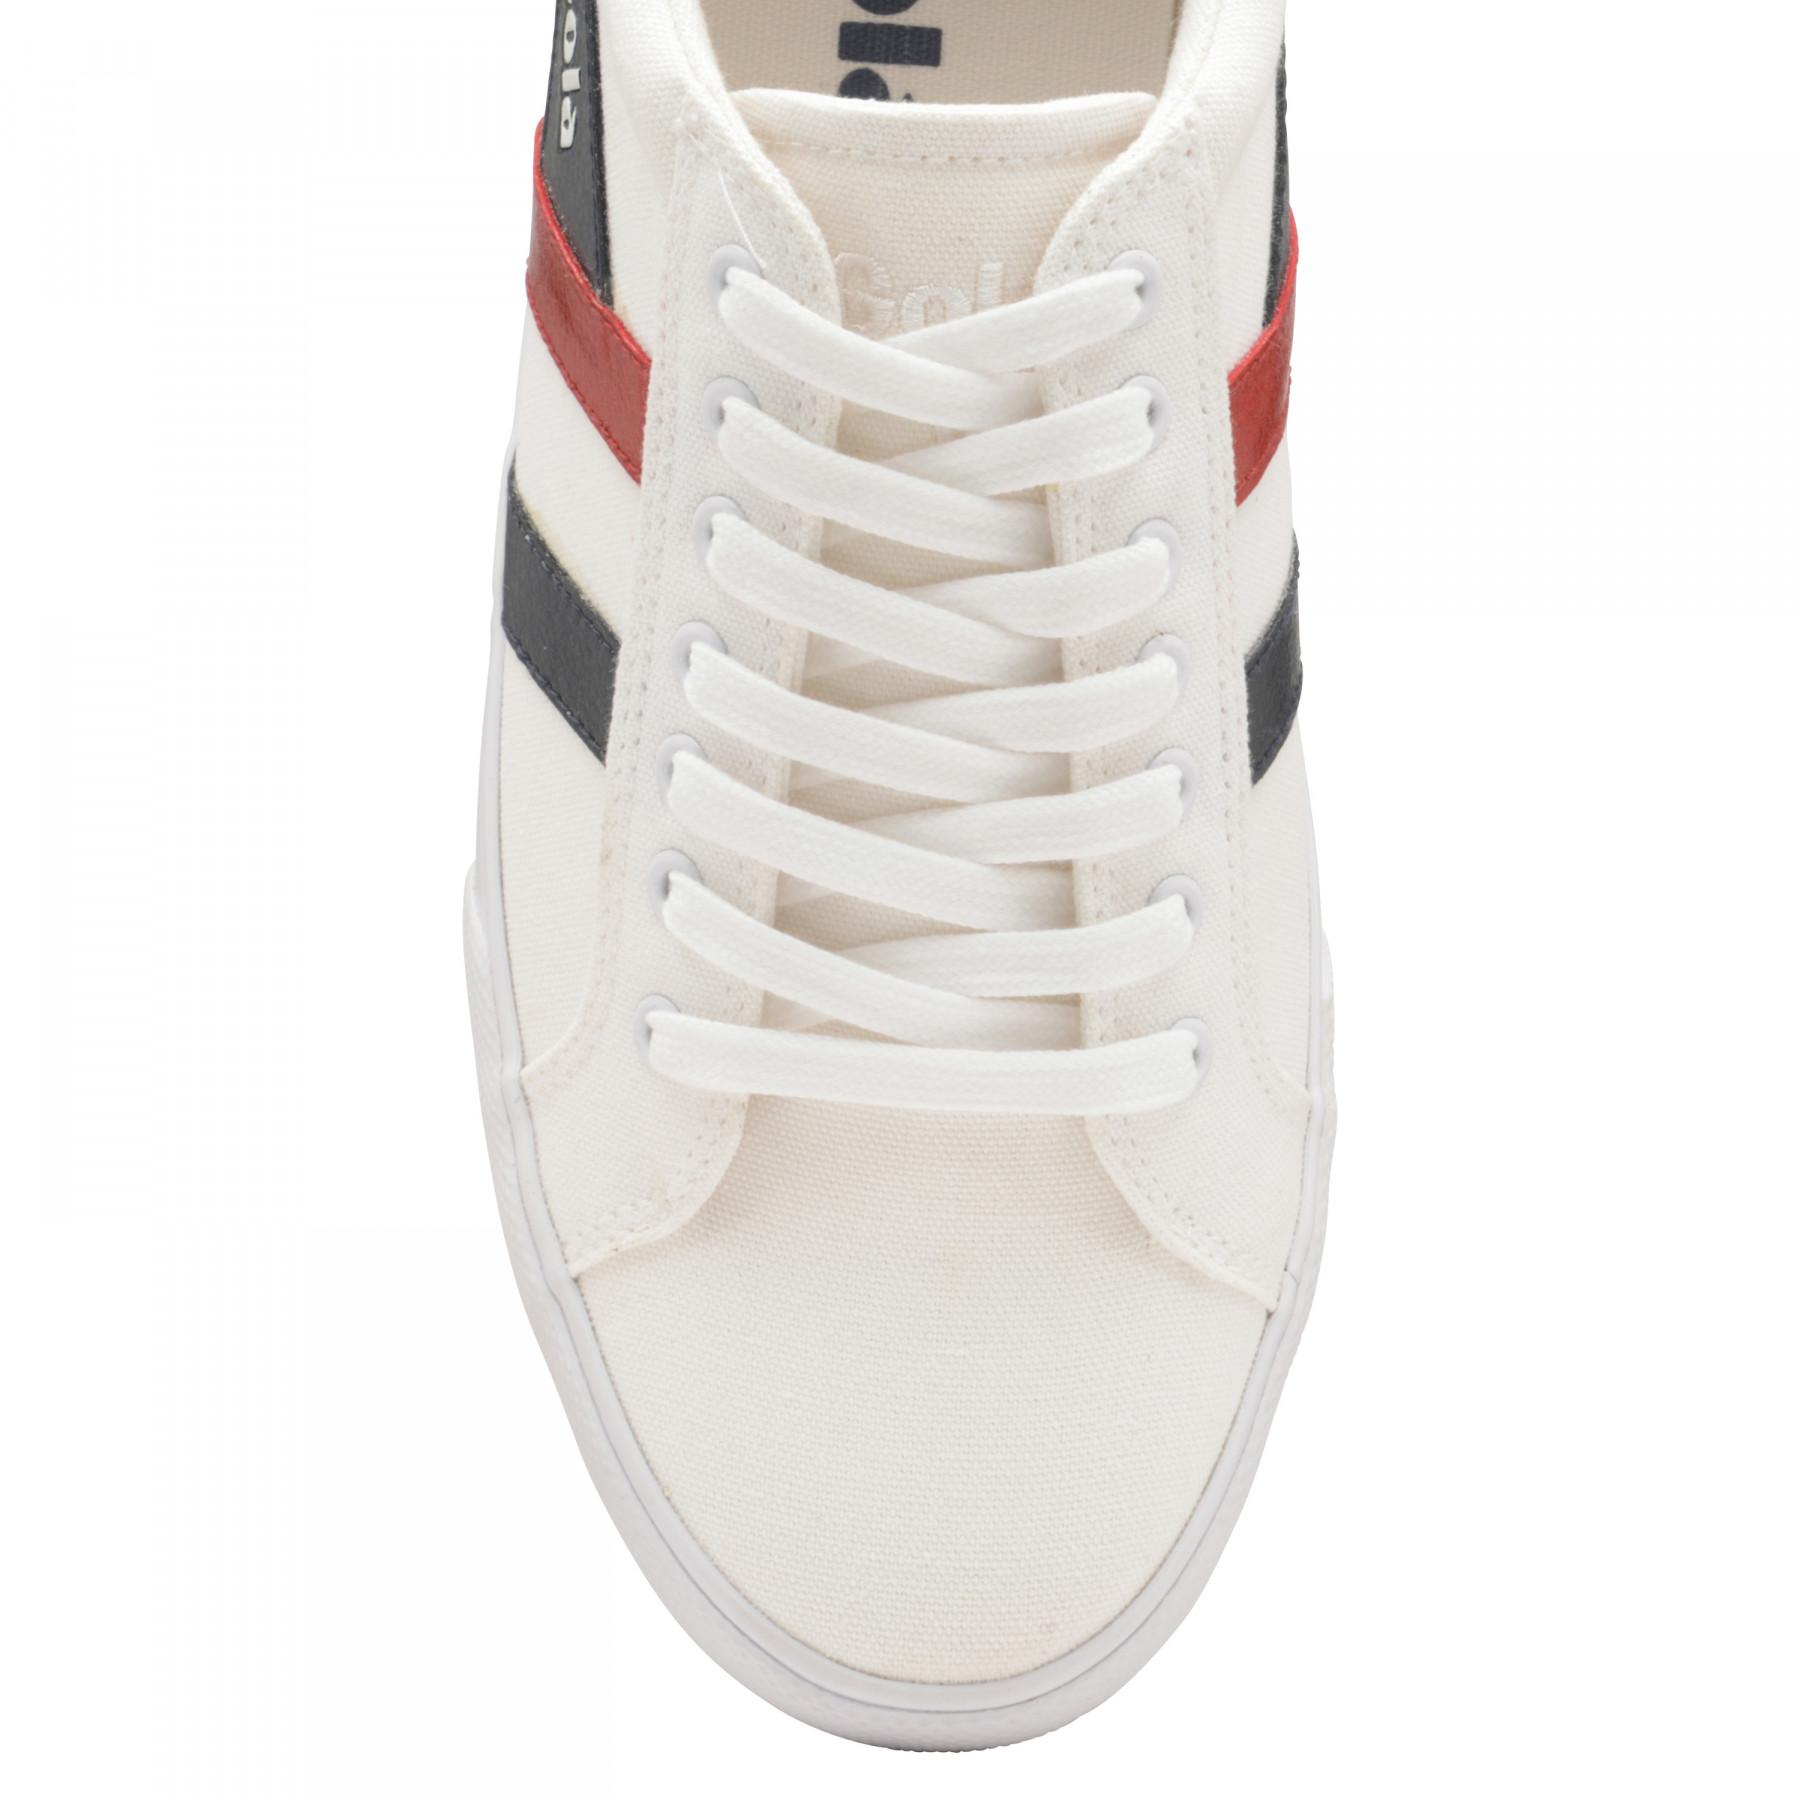 Sneakers Gola Varsity white navy red